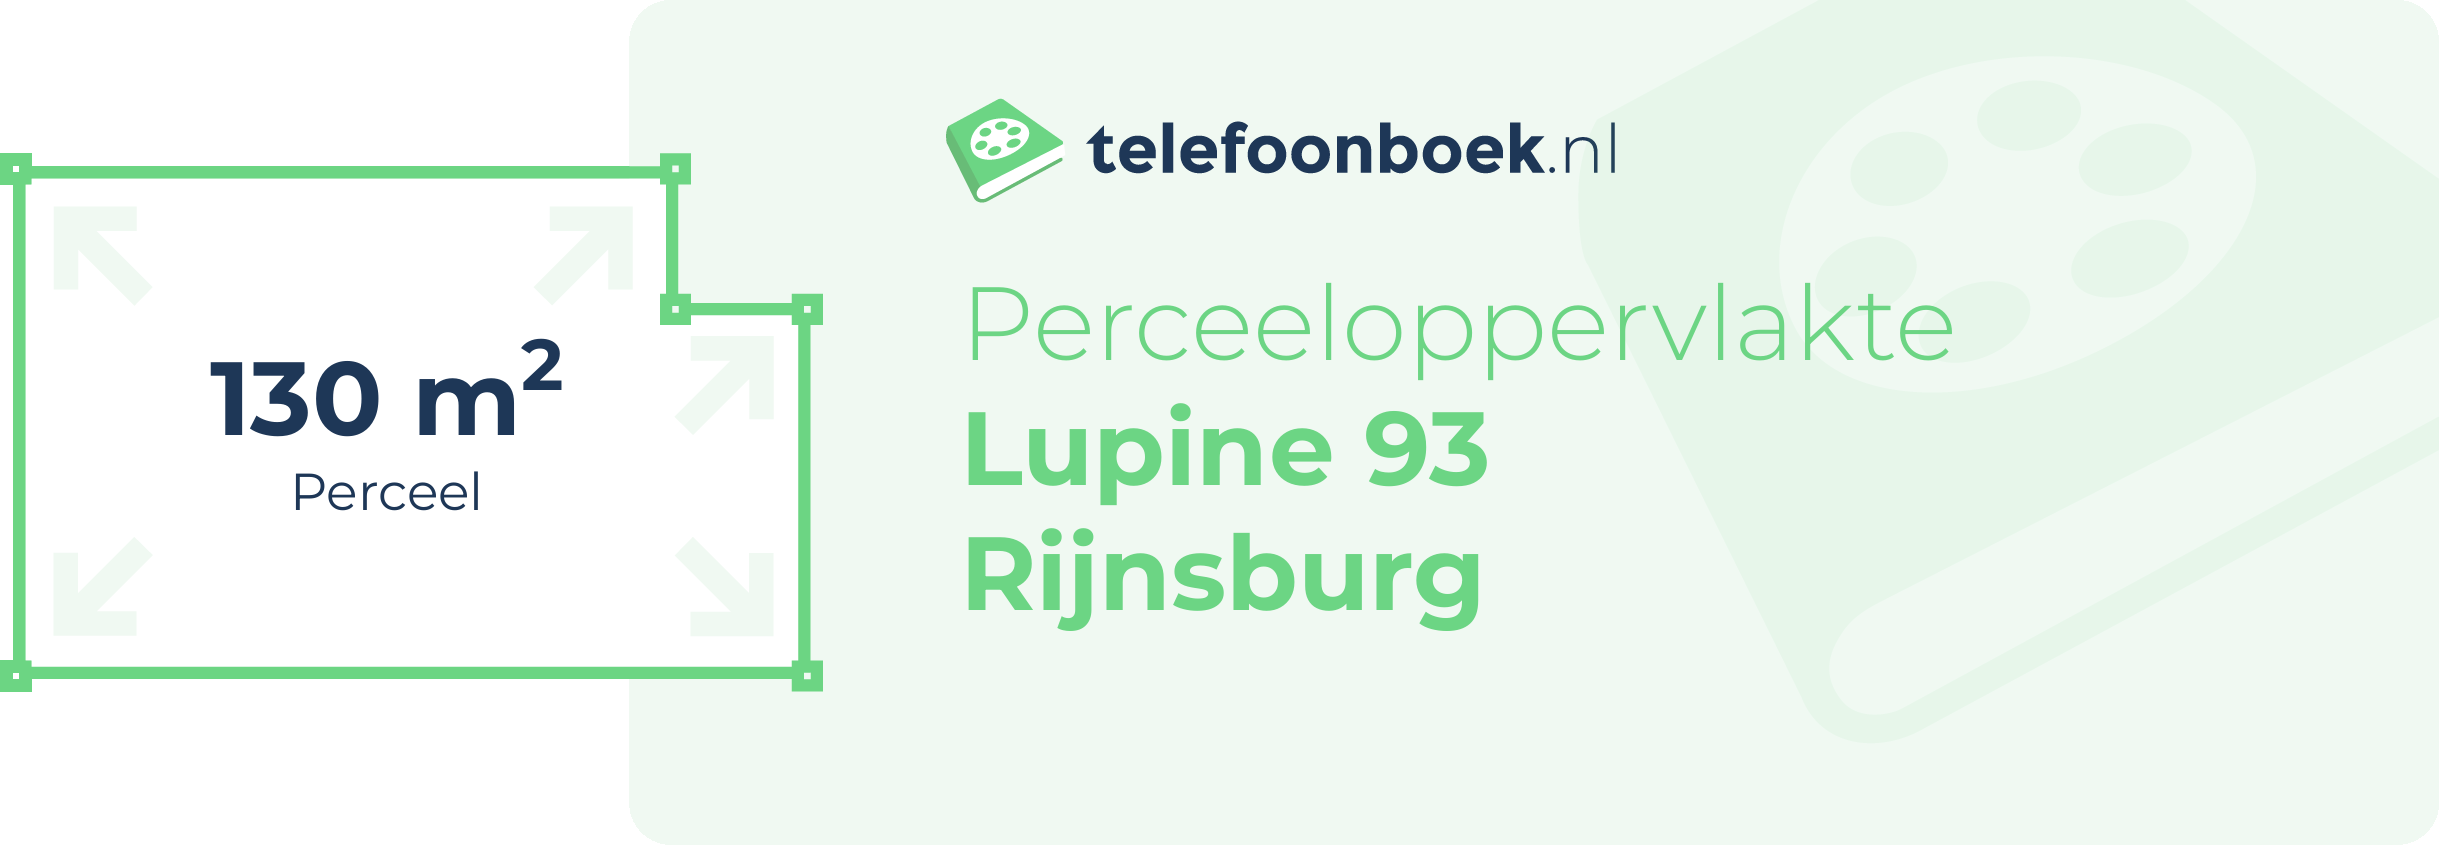 Perceeloppervlakte Lupine 93 Rijnsburg